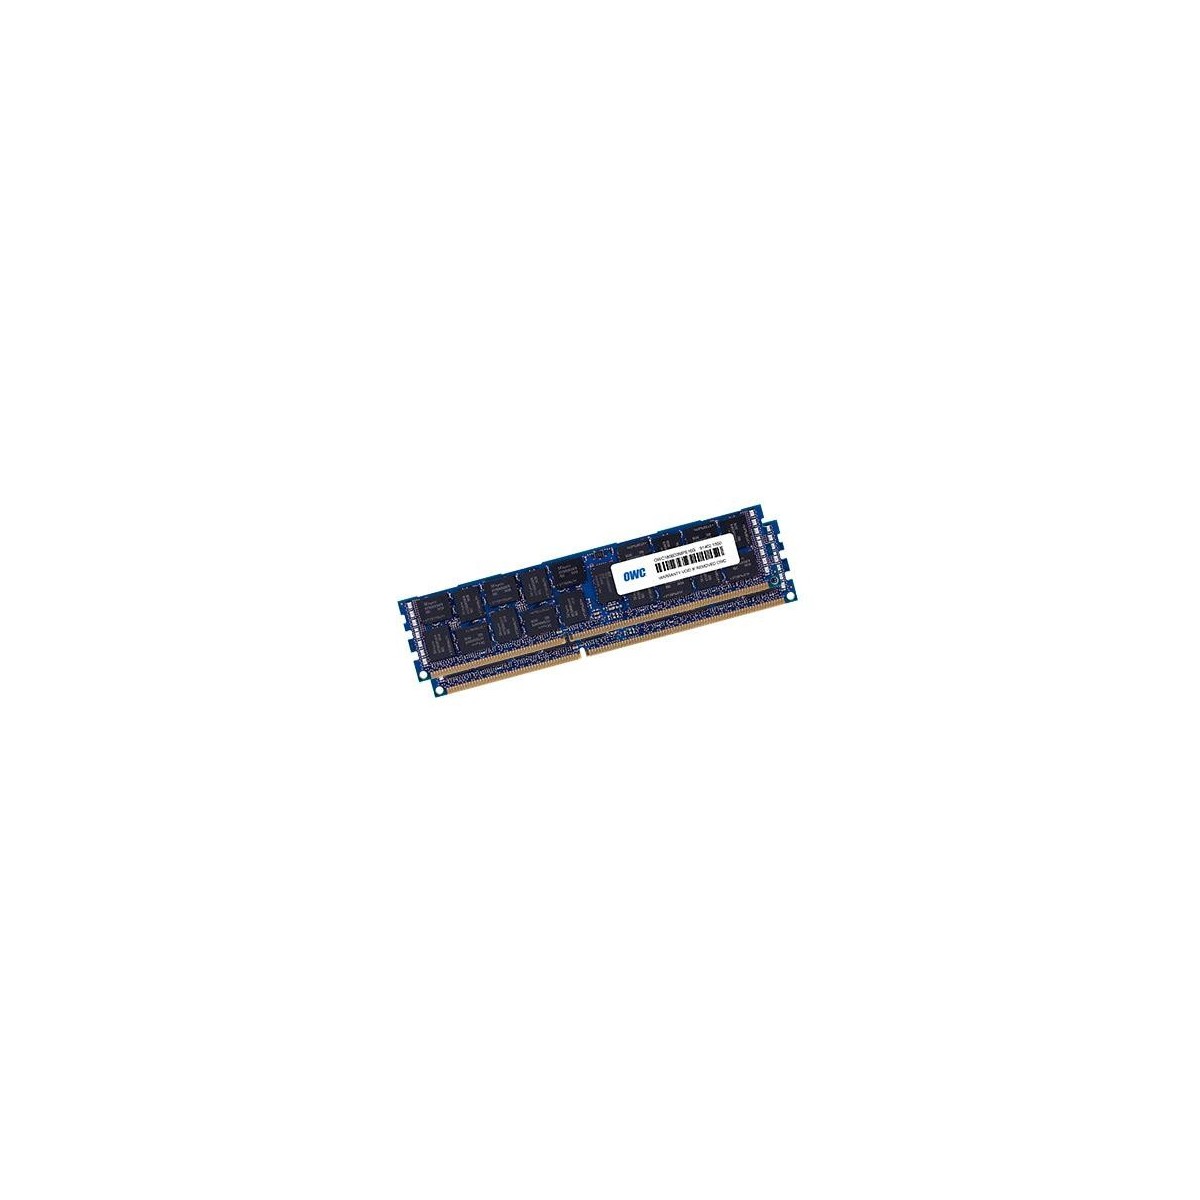 OWC OWC1333D3Z3M064 - 64 GB - 2 x 32 GB - DDR3 - 1333 MHz - 240-pin DIMM - Black,Blue,Gold